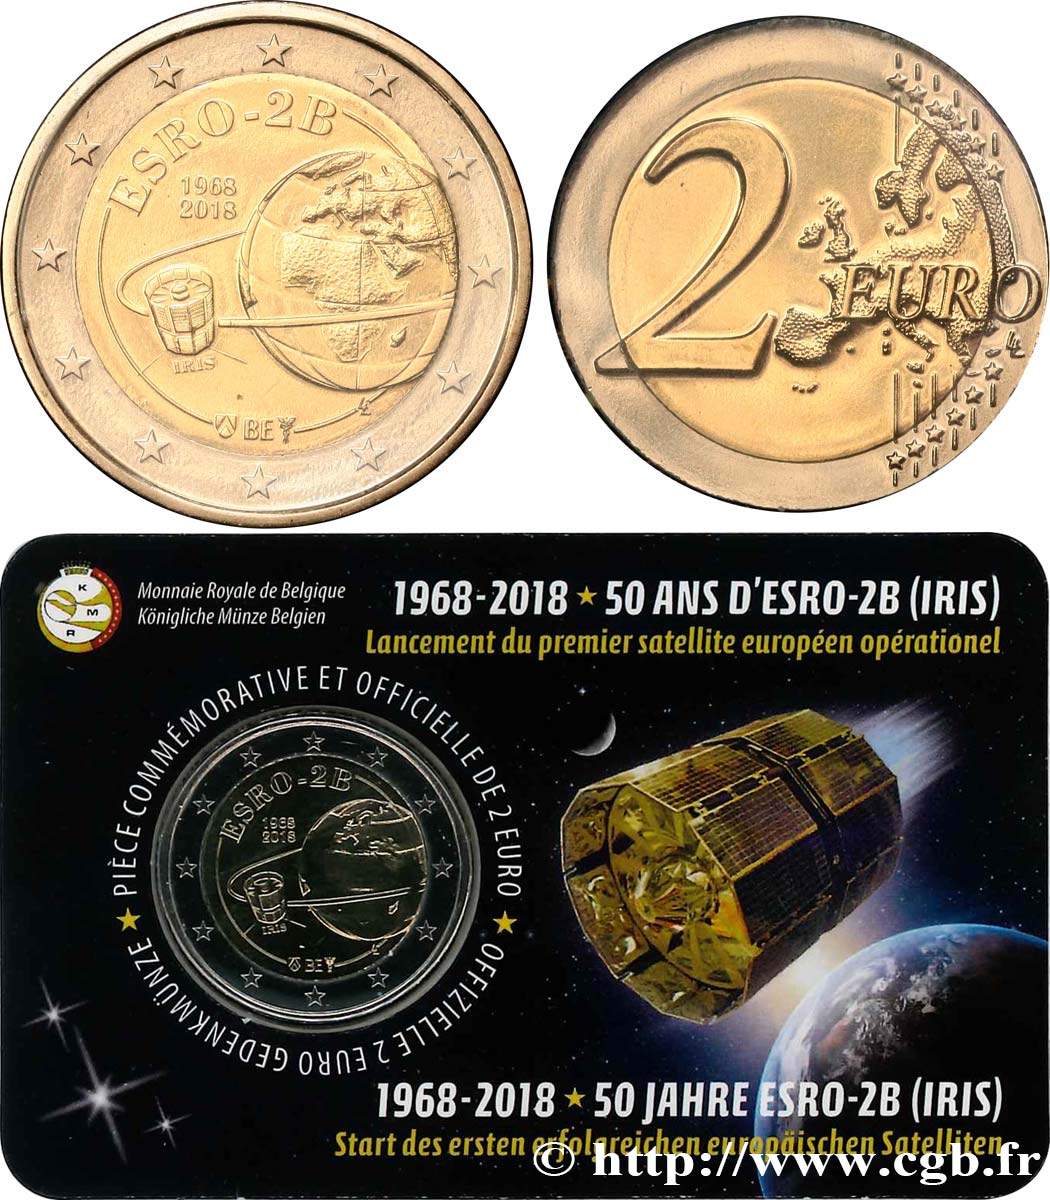 BELGIUM Coin-card 2 Euro 50 ANS D’ESRO-2B (IRIS) - Version française 2018 MS